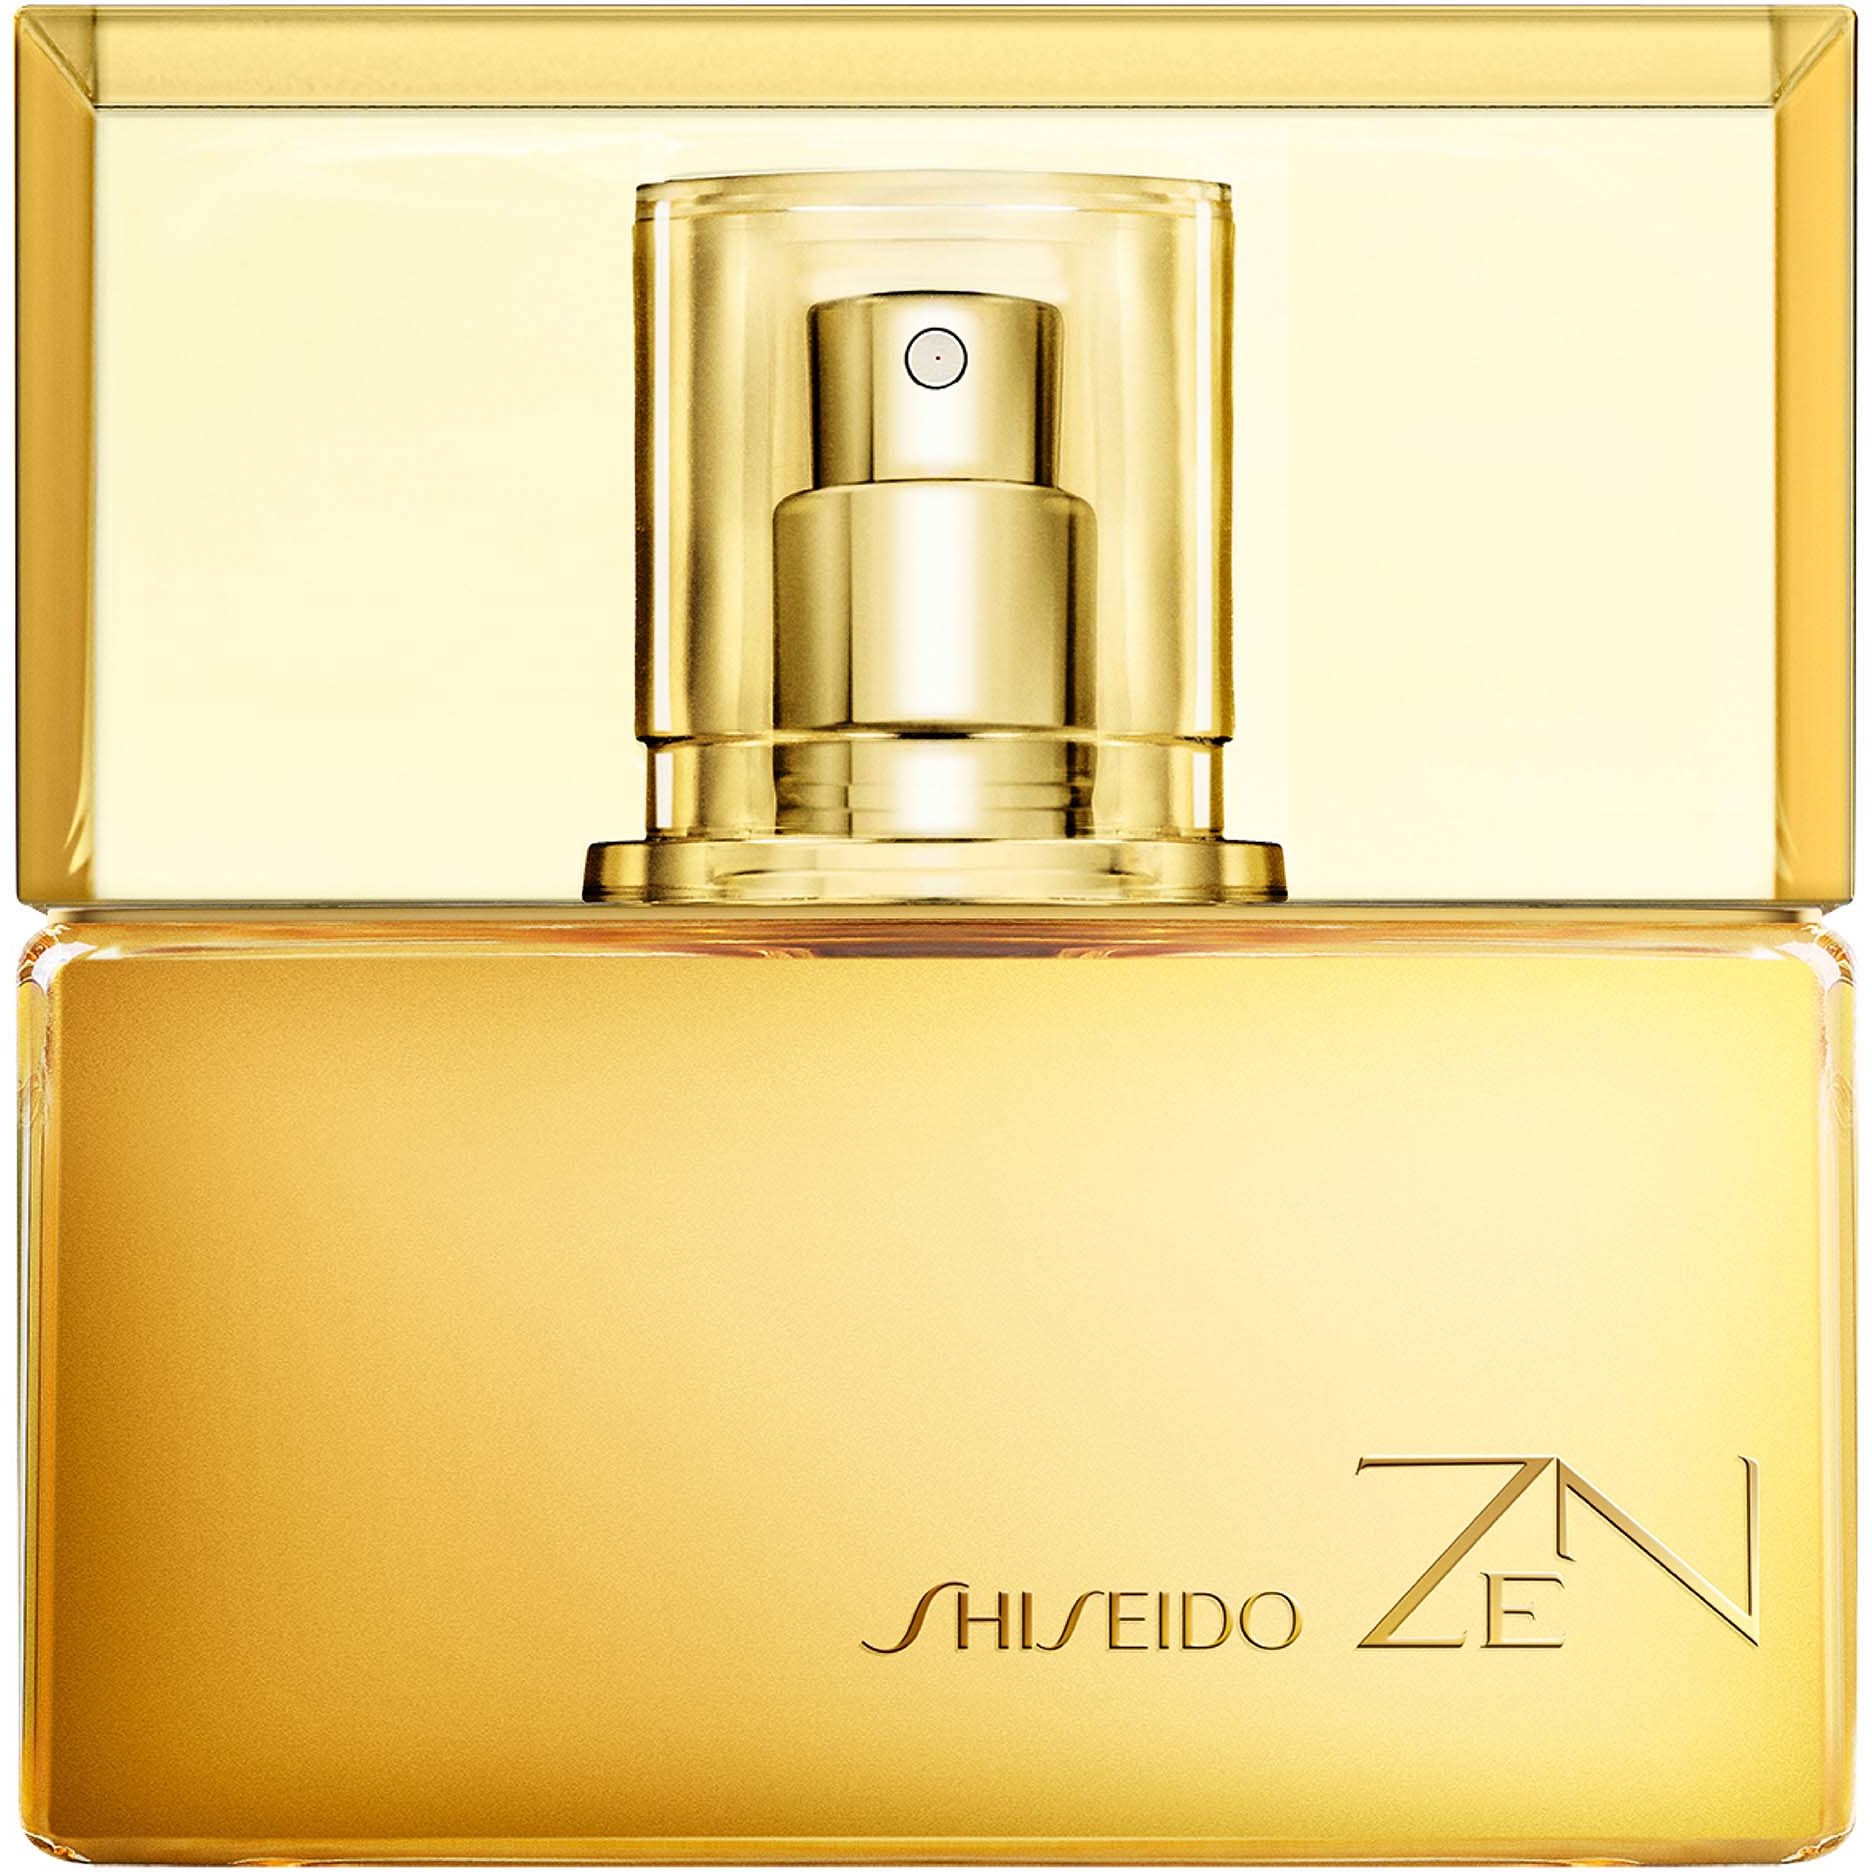 Shiseido Zen Edp 50ml